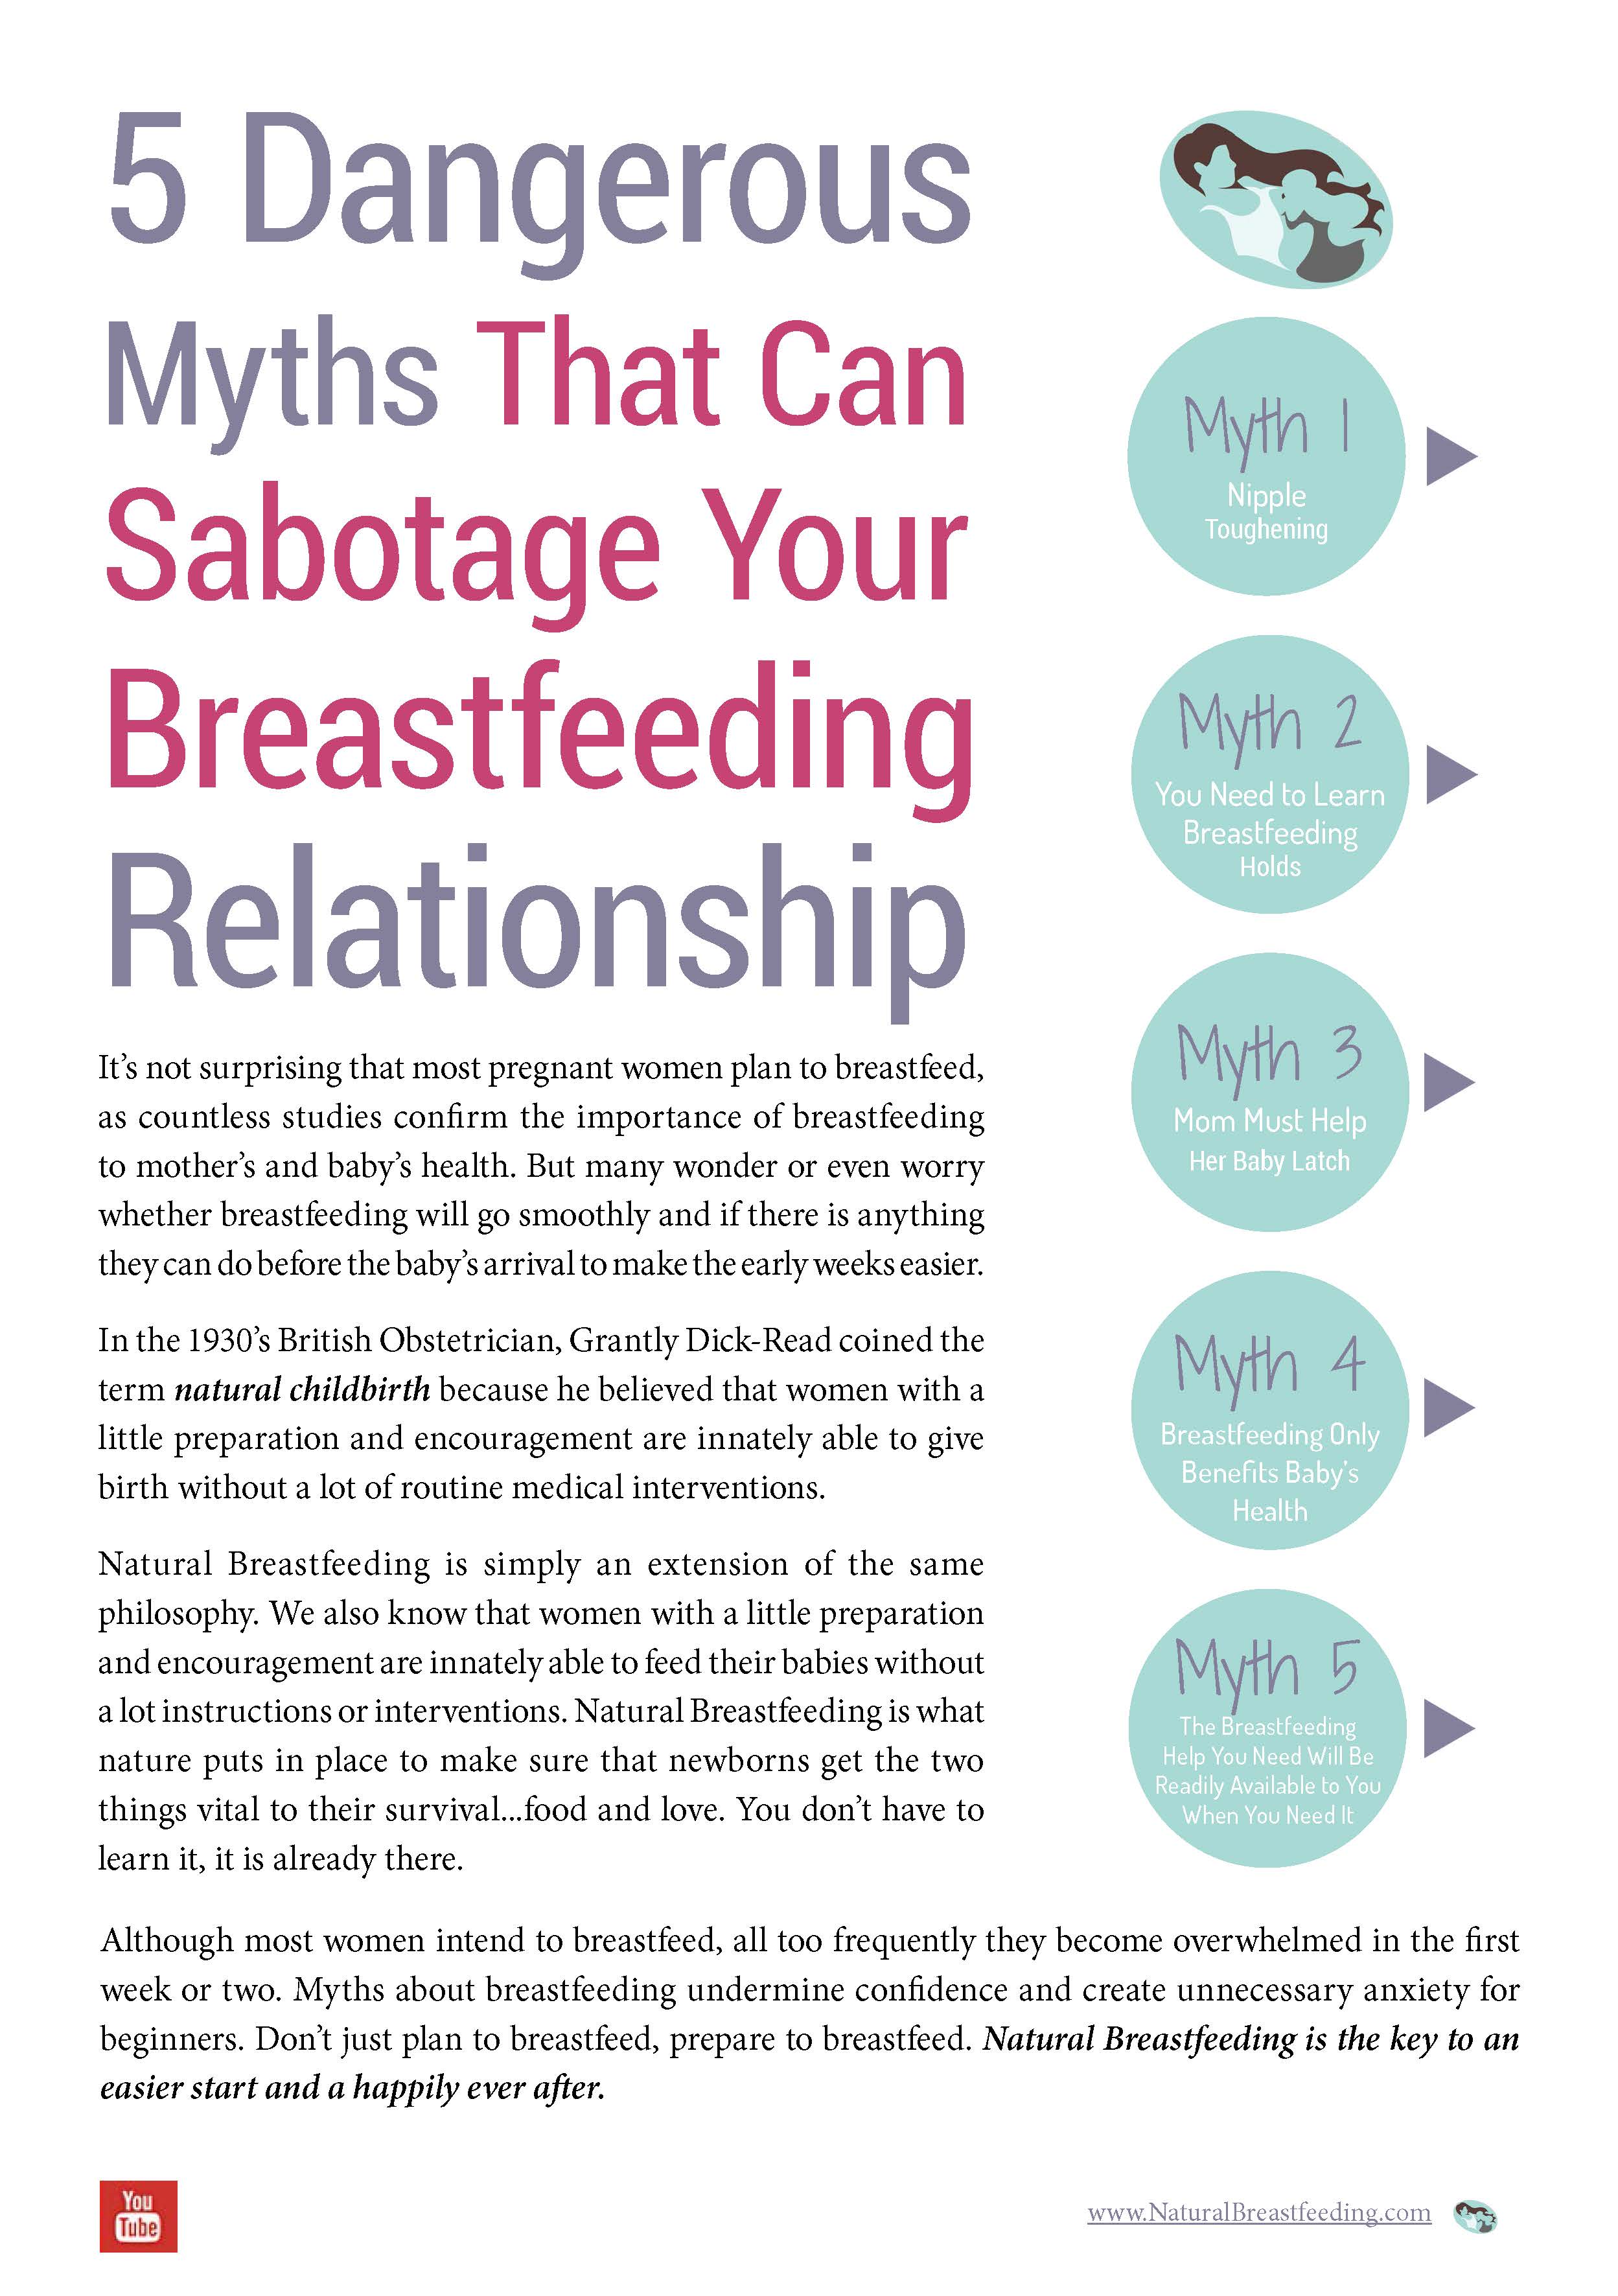 http://www.naturalbreastfeeding.com/wp-content/uploads/2016/05/5-Myths-NturalBreastfeeding.jpg